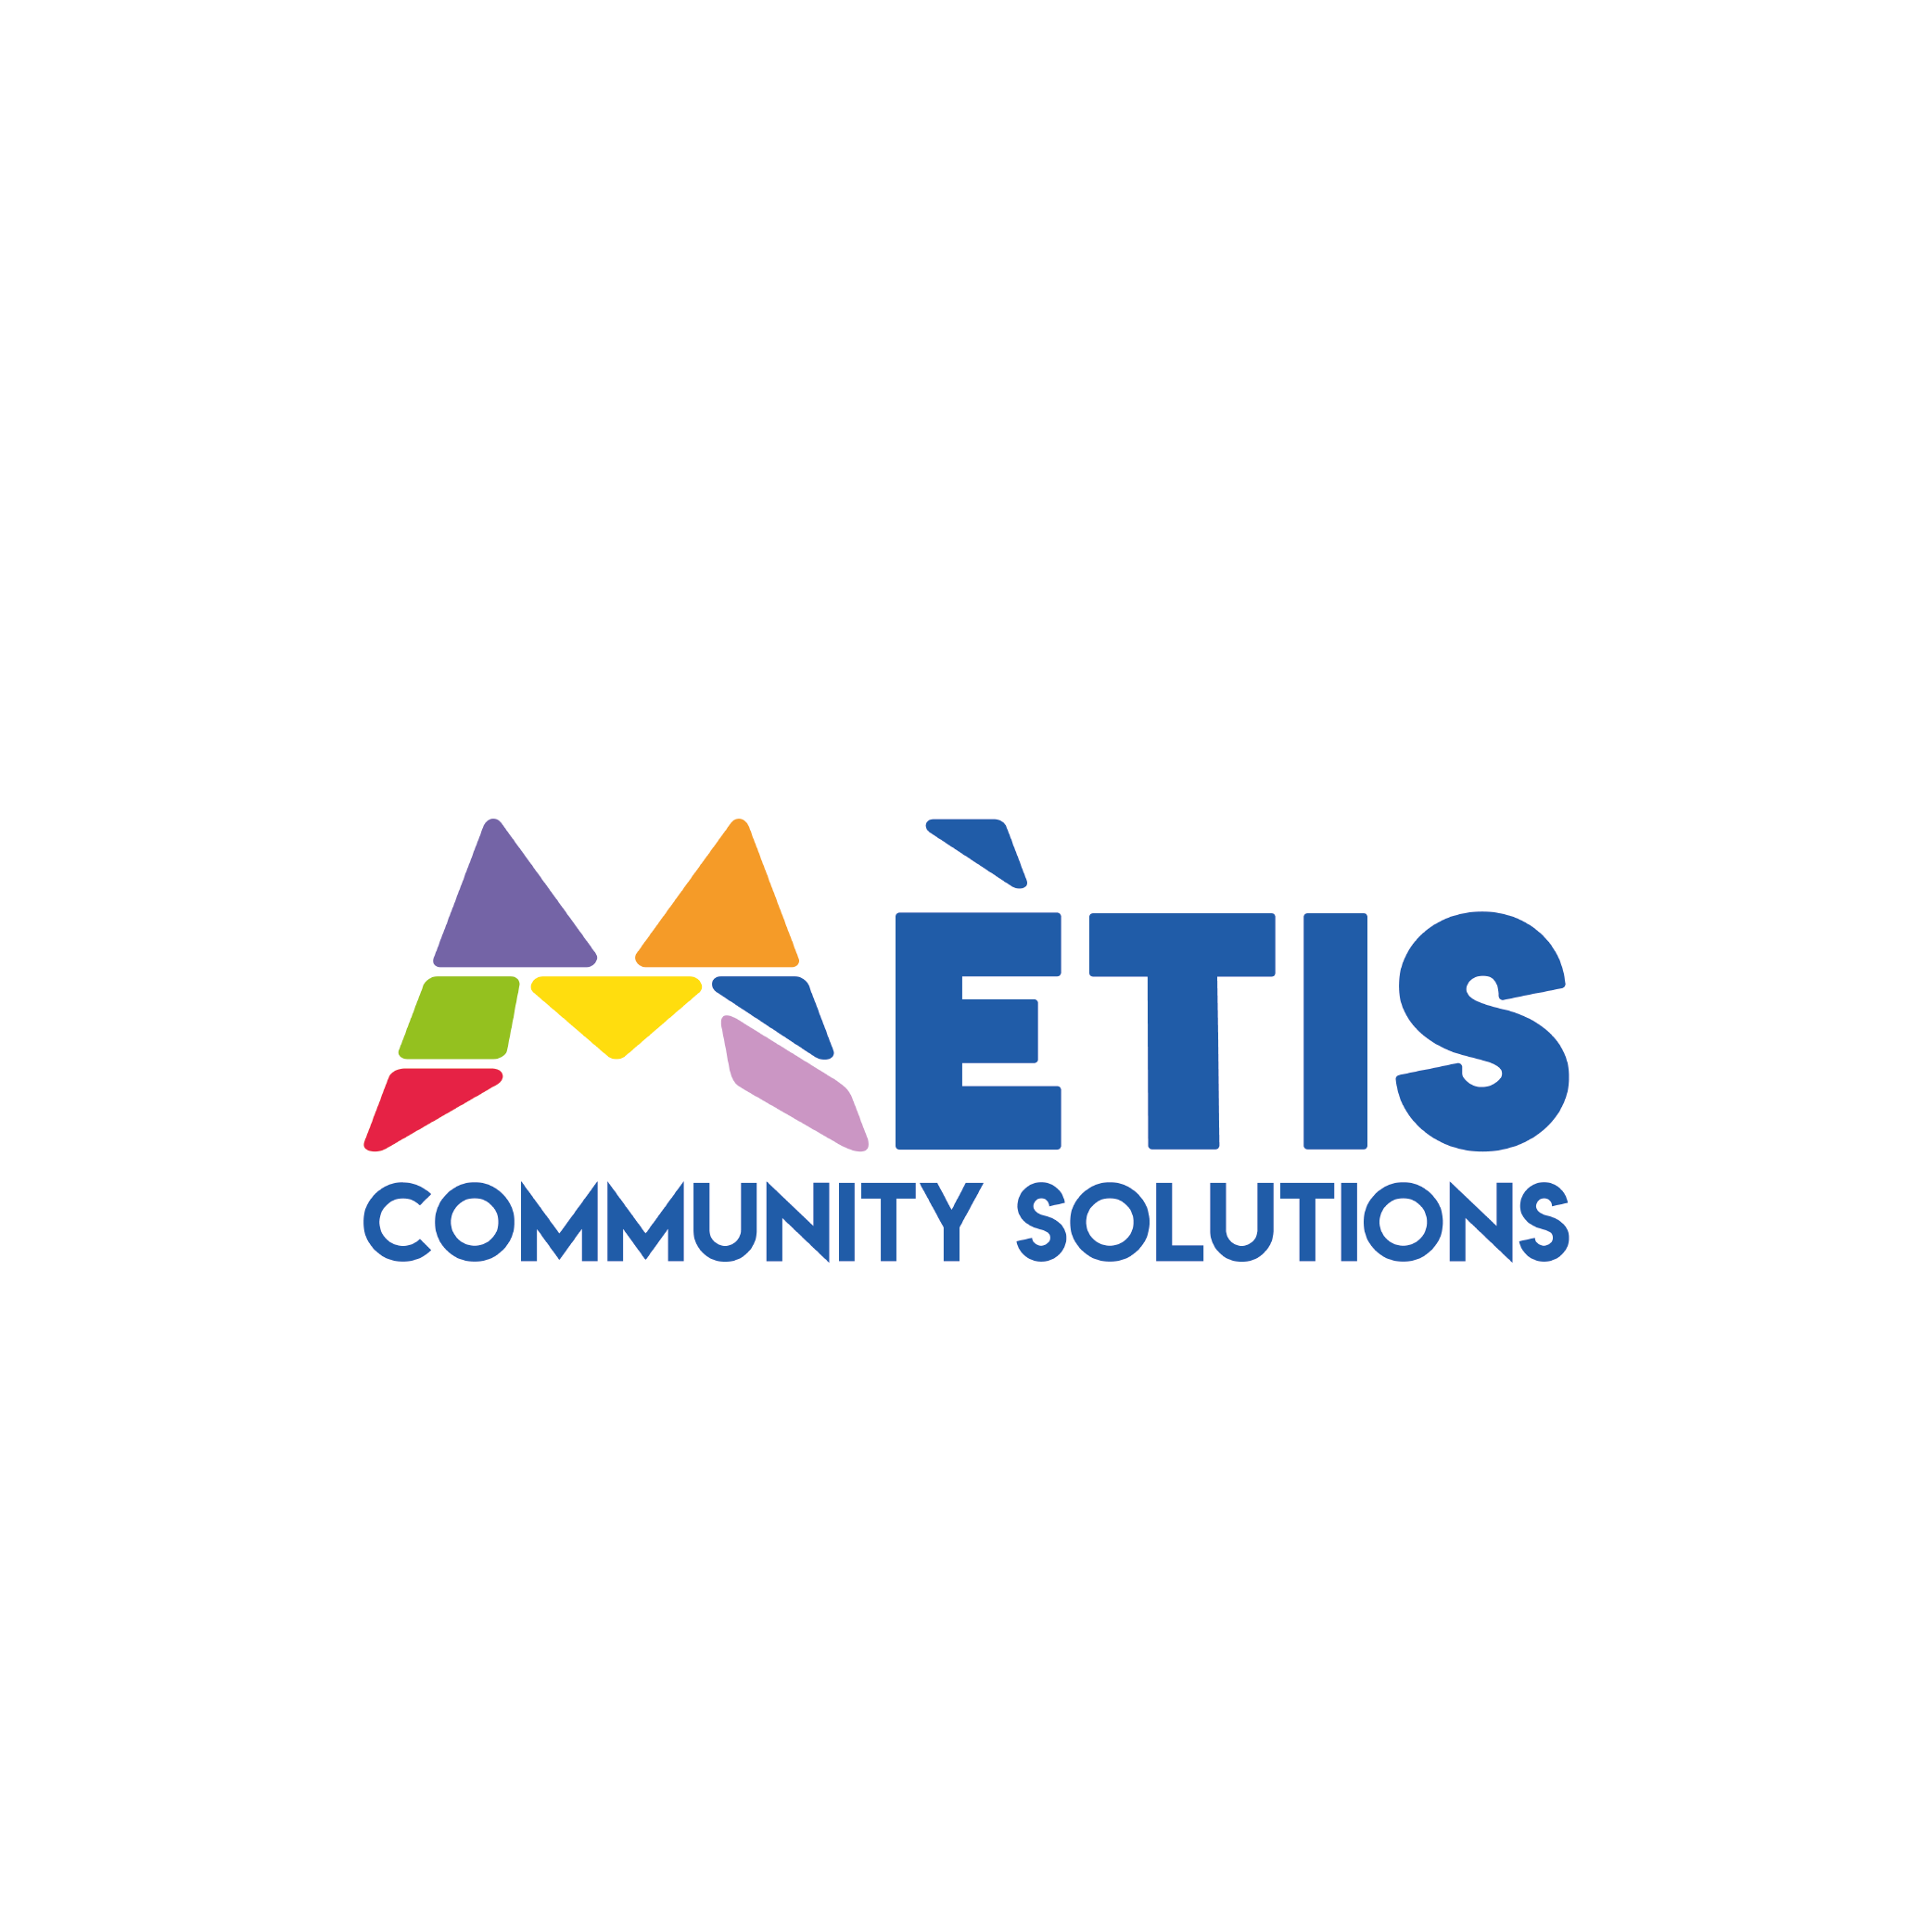 Mètis Community Solutions